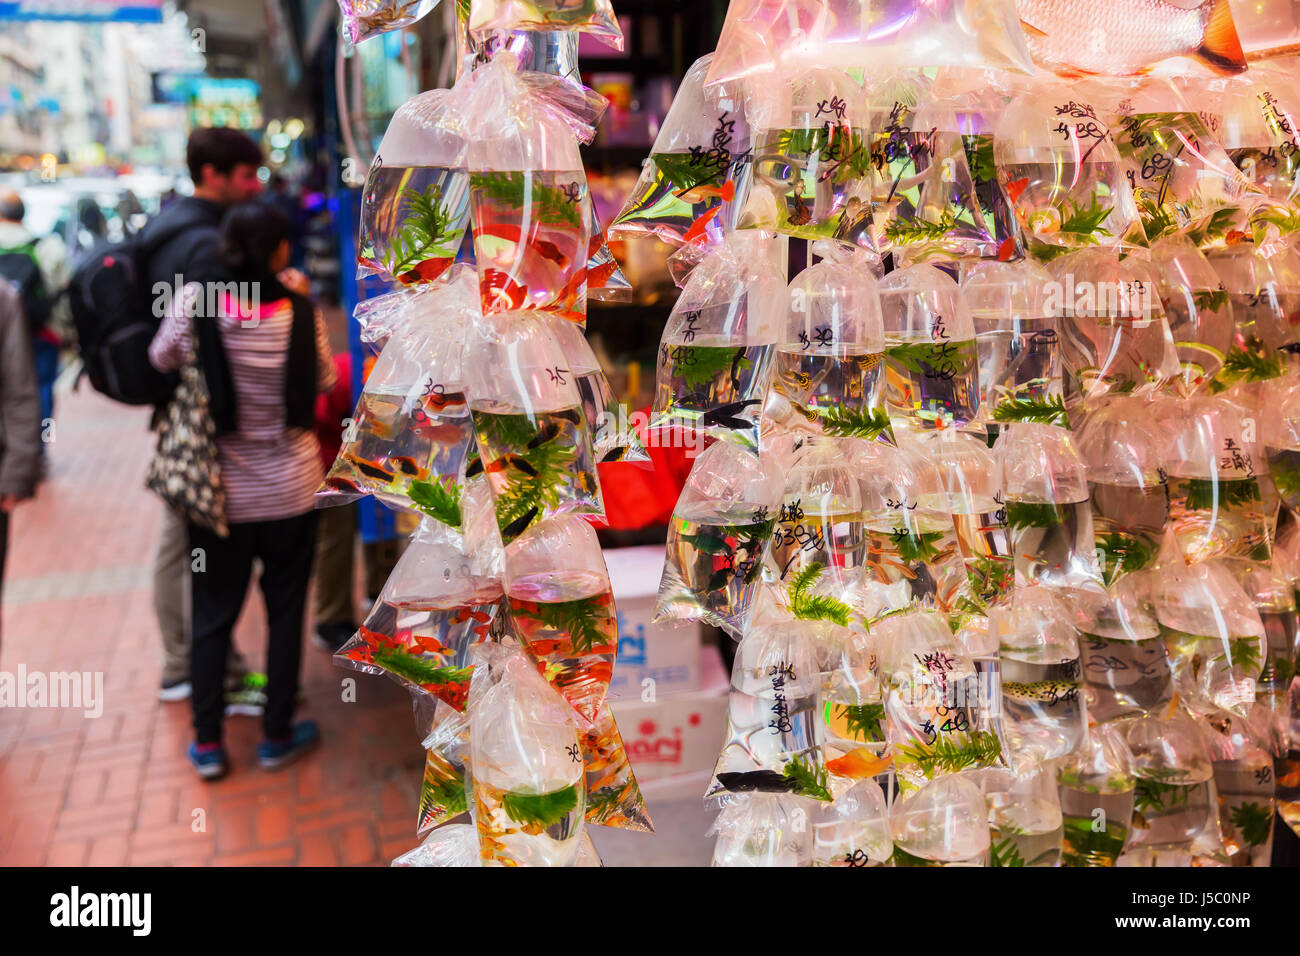 Hong Kong, Hong Kong - 10. März 2017: Goldfisch-Markt in Kowloon, Hong Kong, mit unbekannten Menschen. Es ist ein beliebter Ort für Touristen Stockfoto